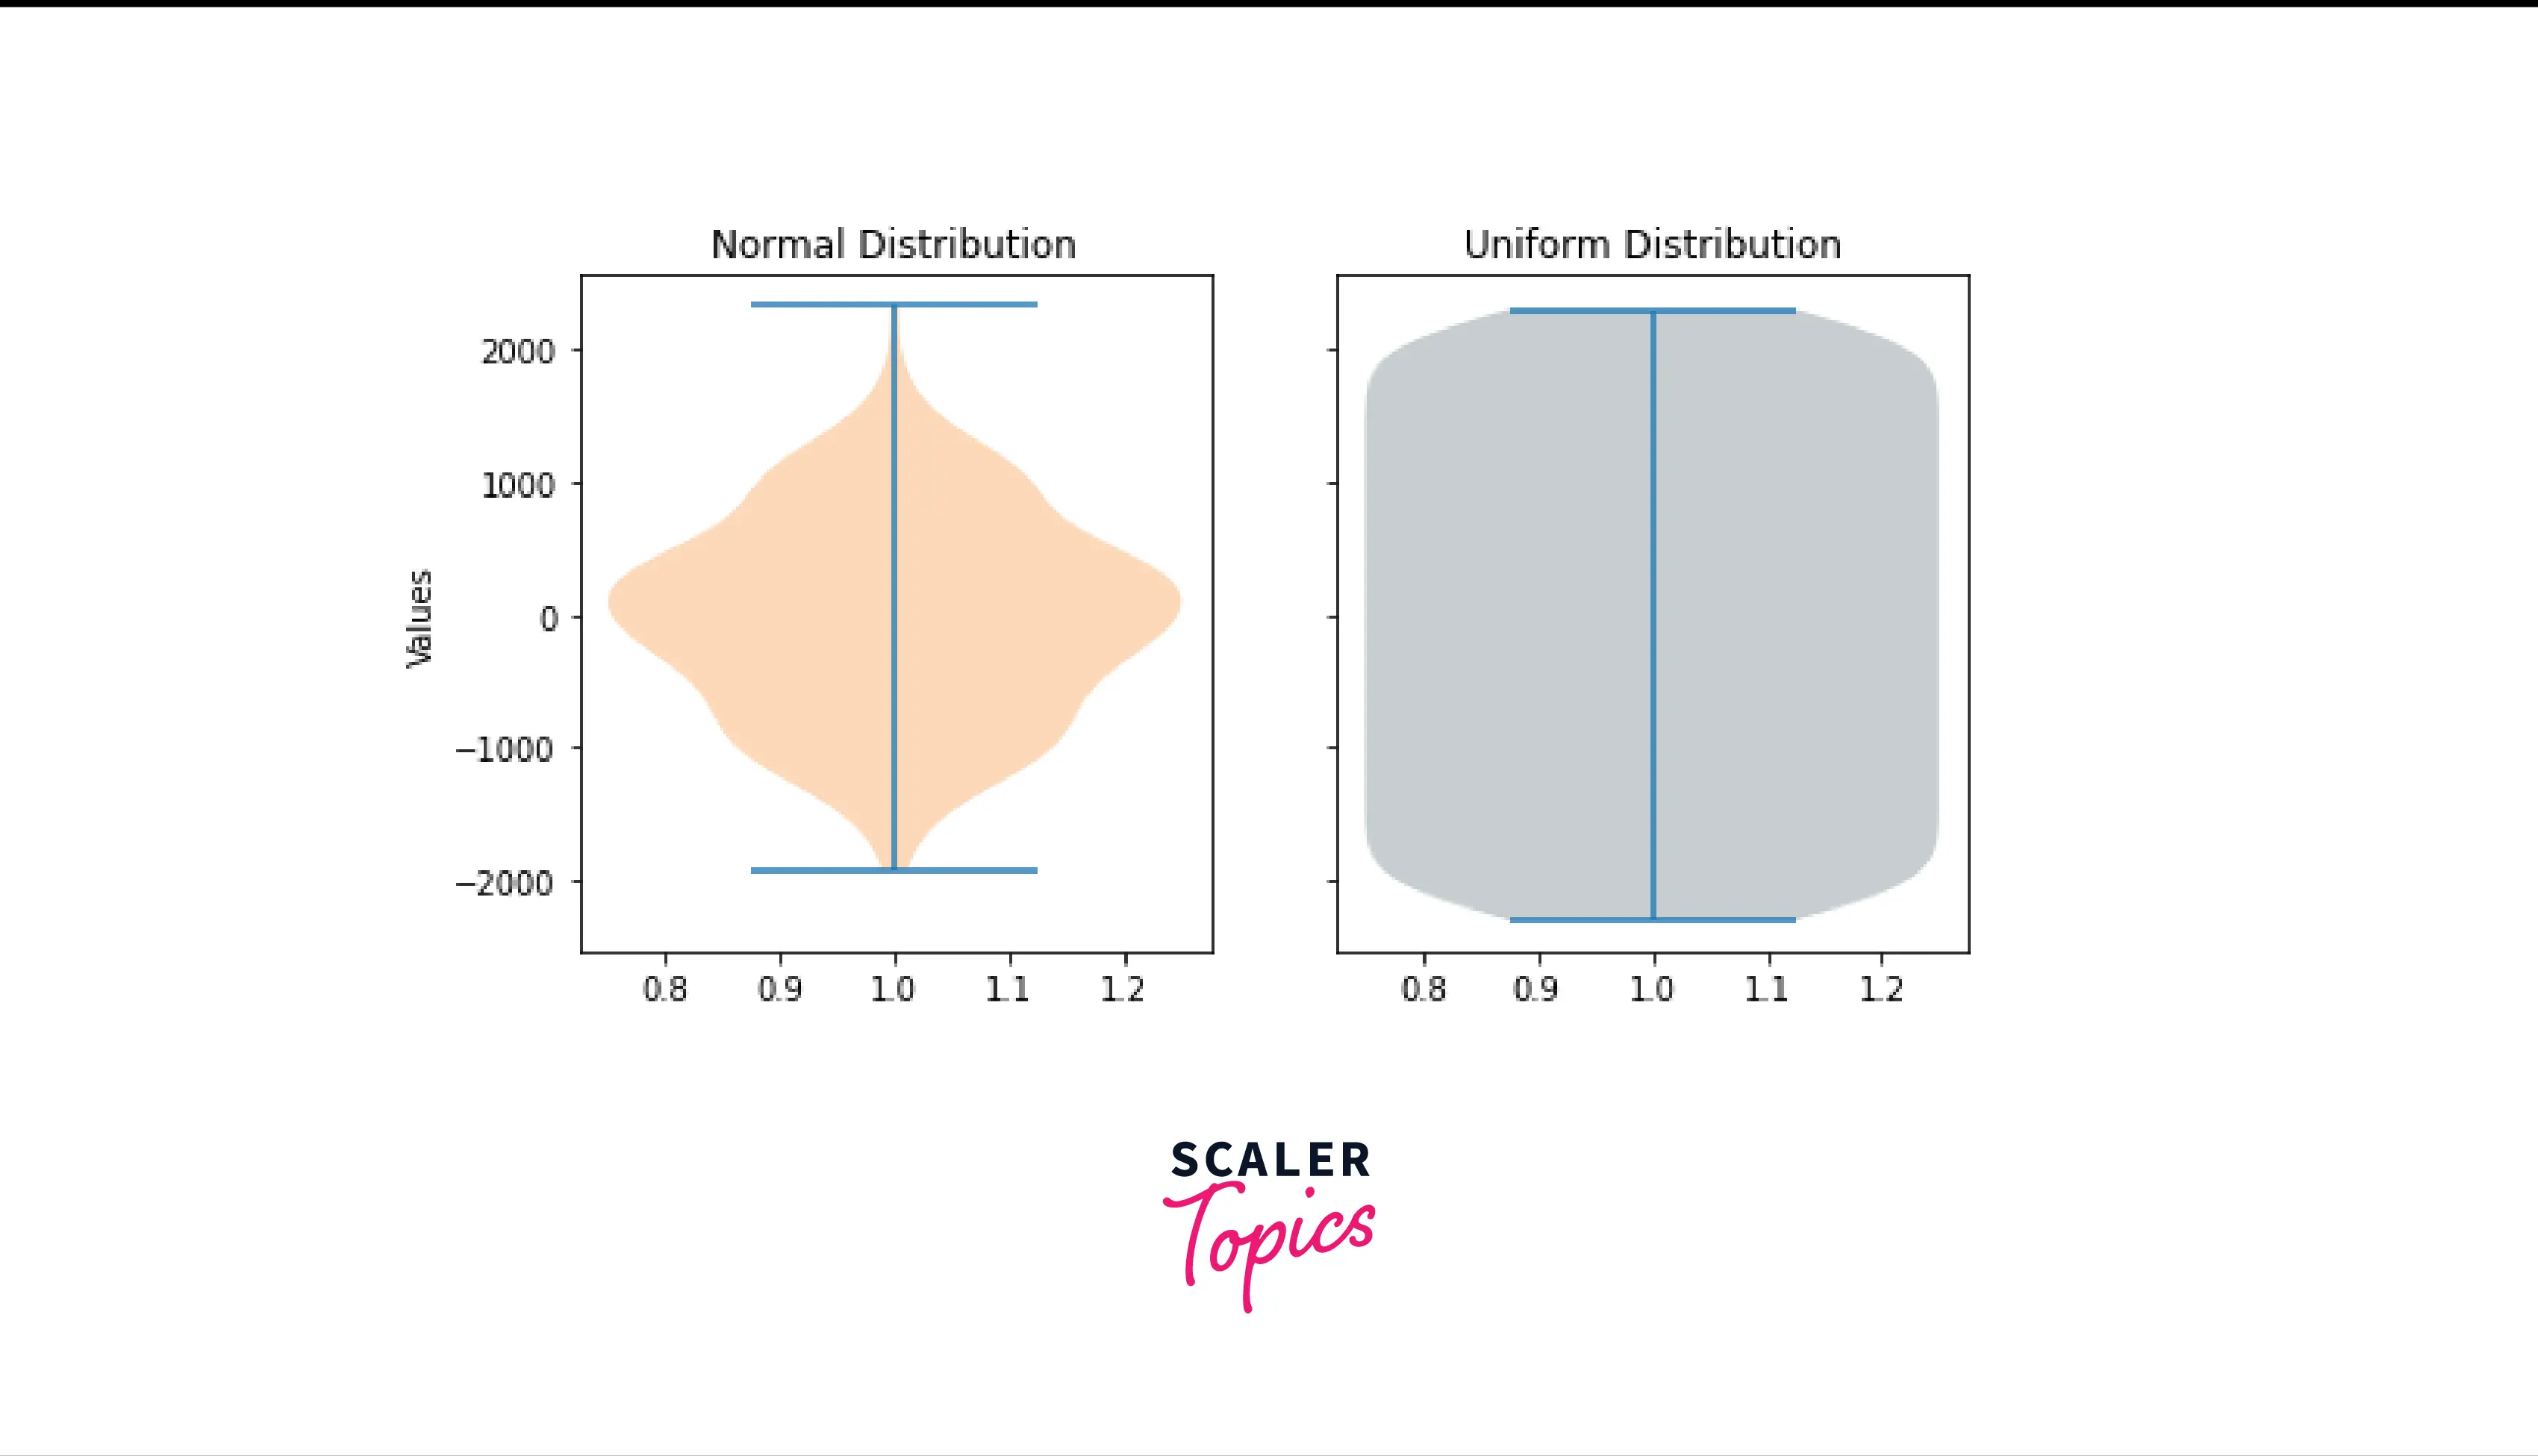 Violin plot comparing uniform and normal data sets